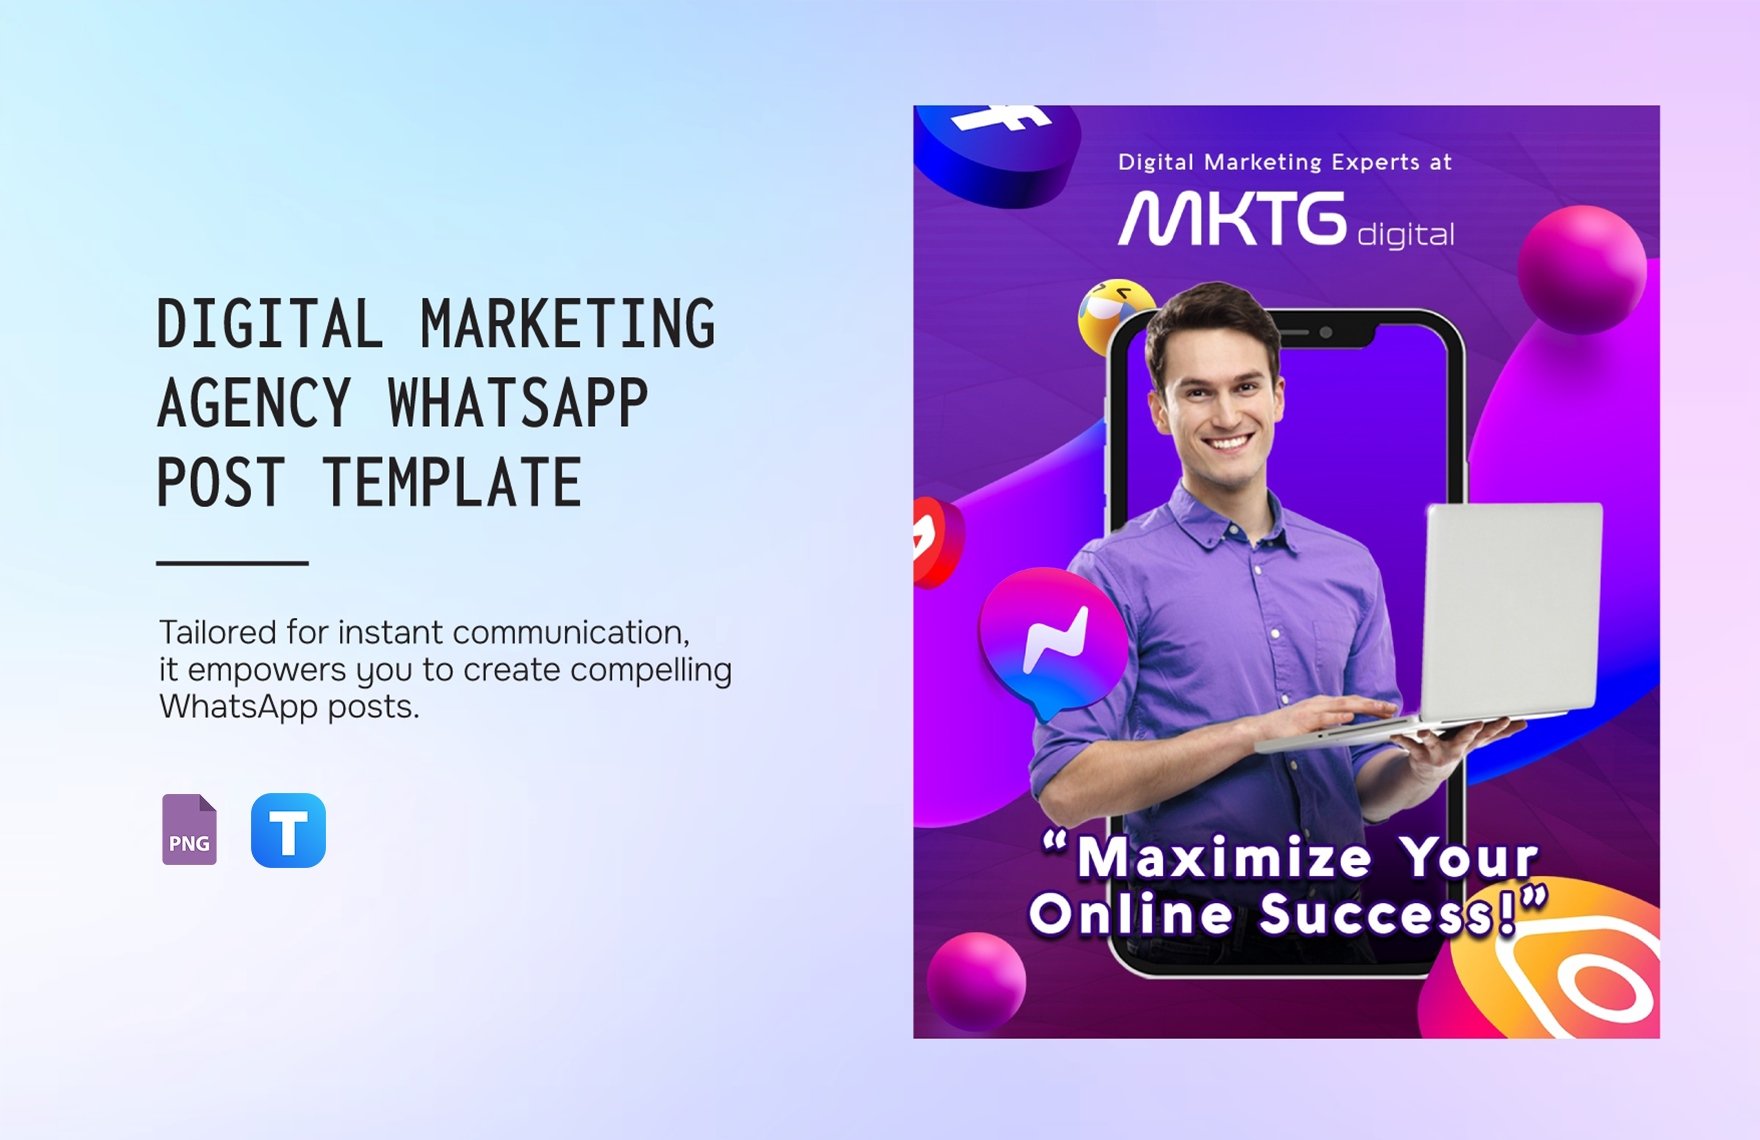 Digital Marketing Agency WhatsApp Post Template